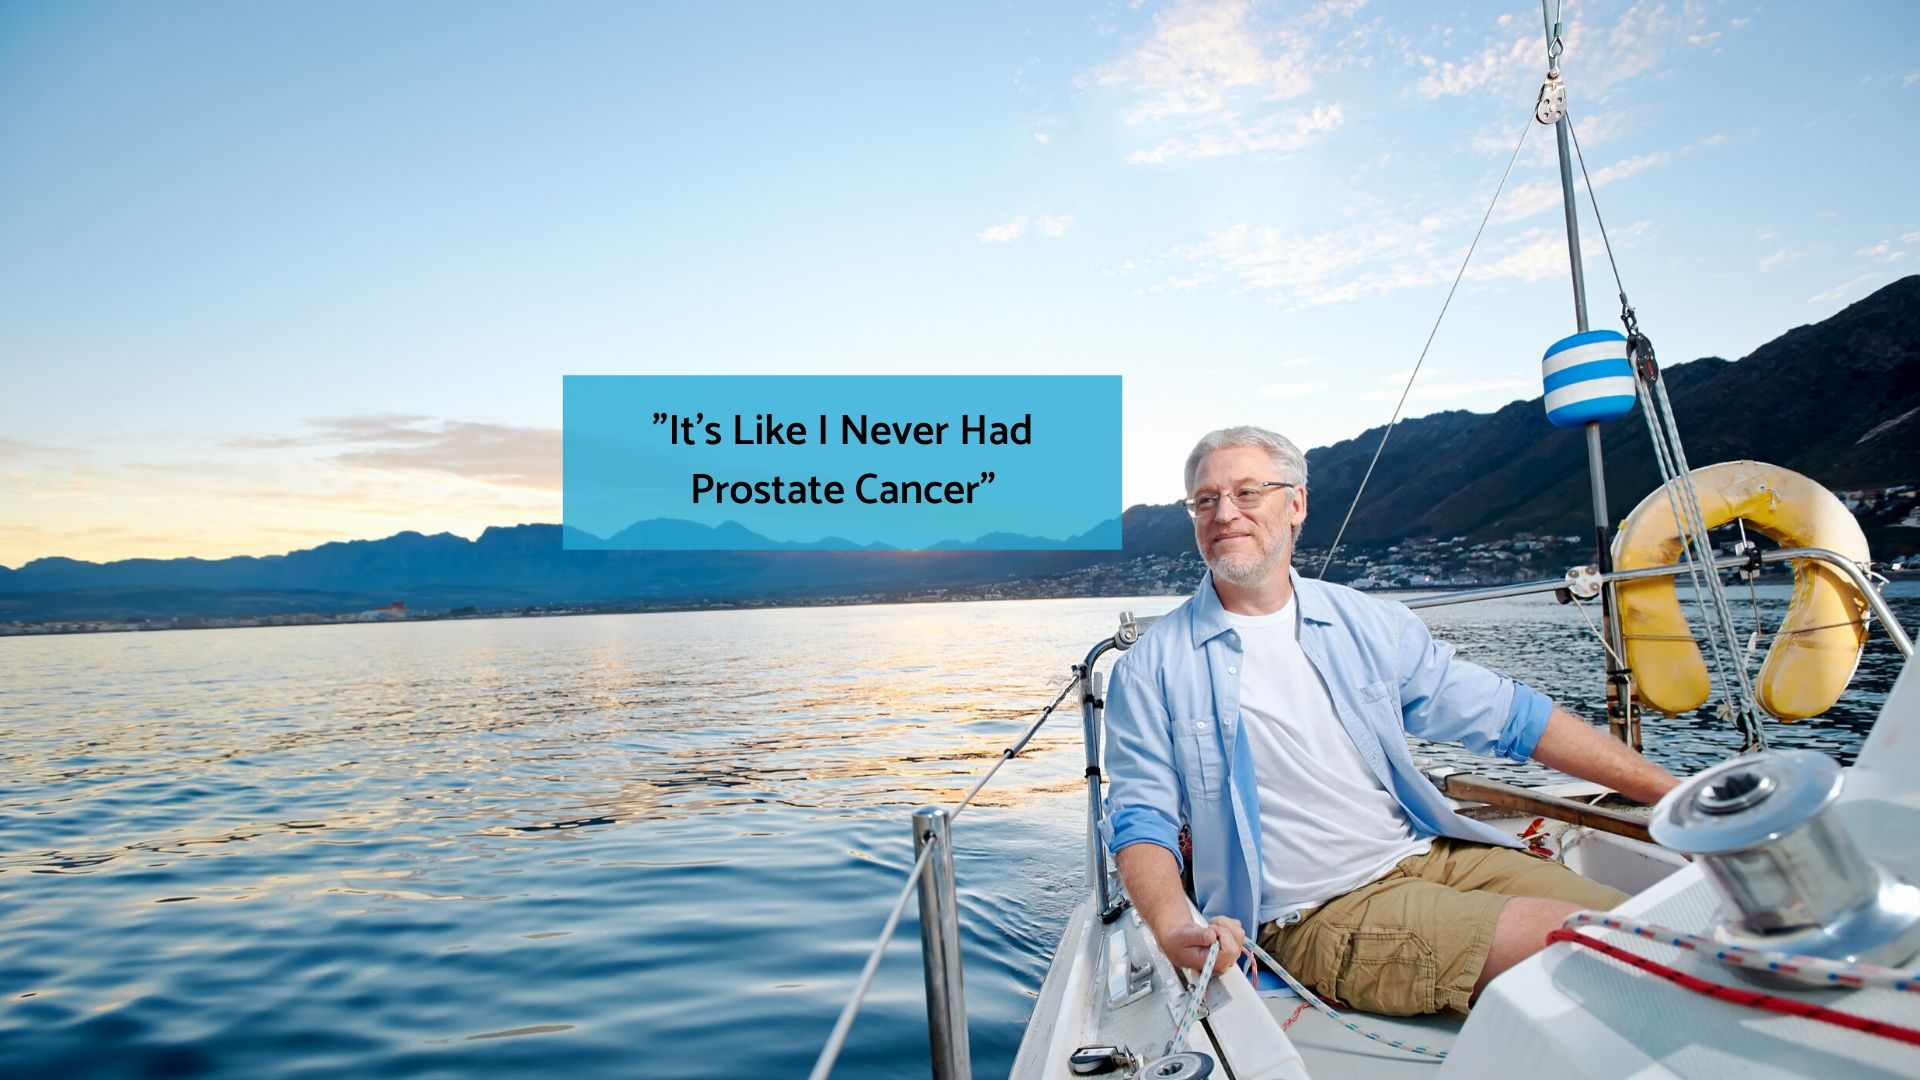 prostate cancer treatment - best cancer treatment for men - elderly man prostate cancer - prostate treatment for older men - elderly men cancer treatment - cyberknife technology